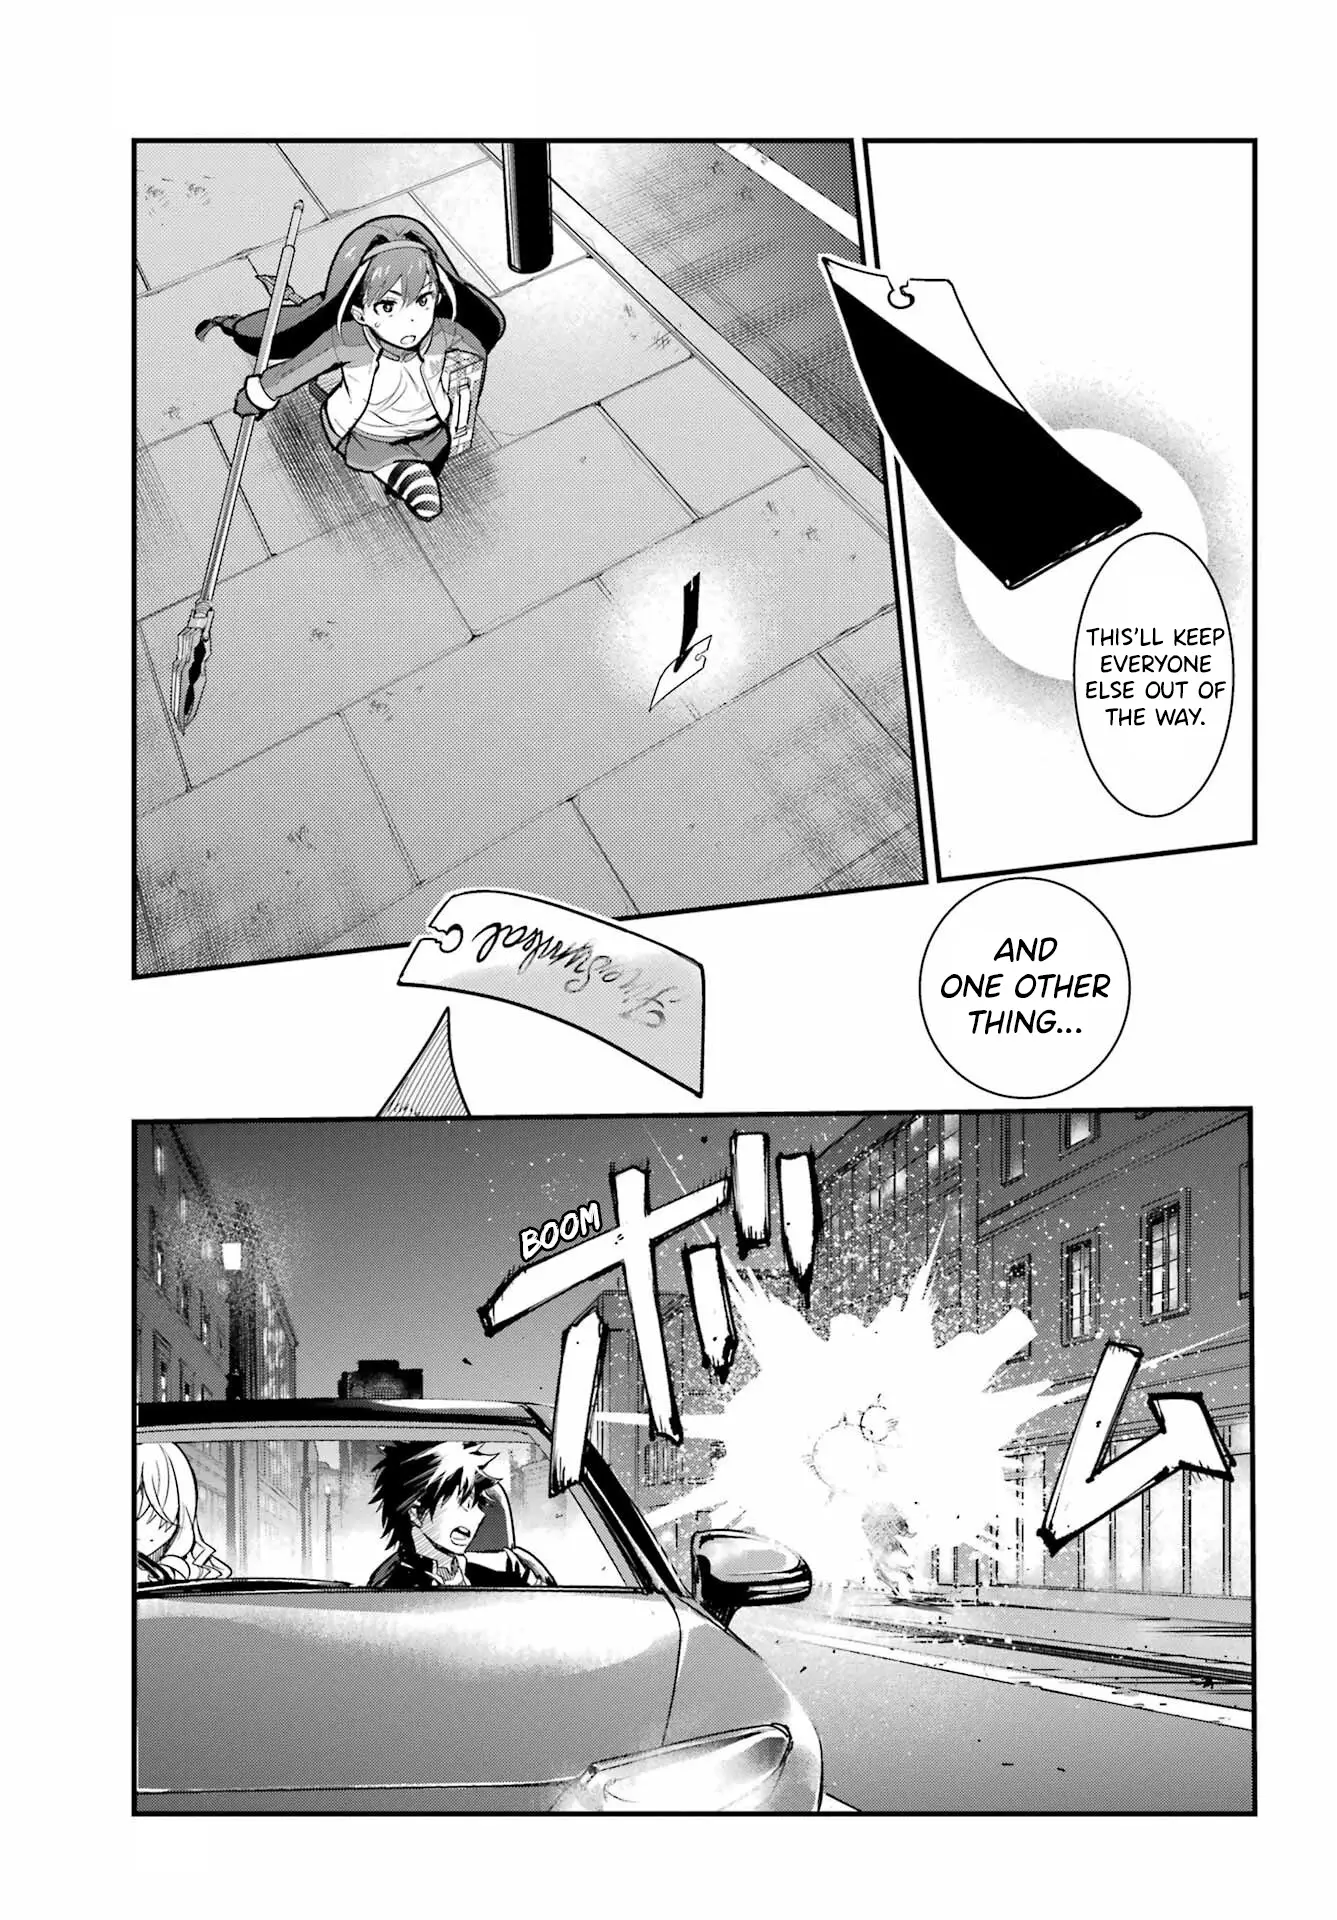 Toaru Majutsu No Index - 4Koma Koushiki Anthology - 171 page 11-2248c149